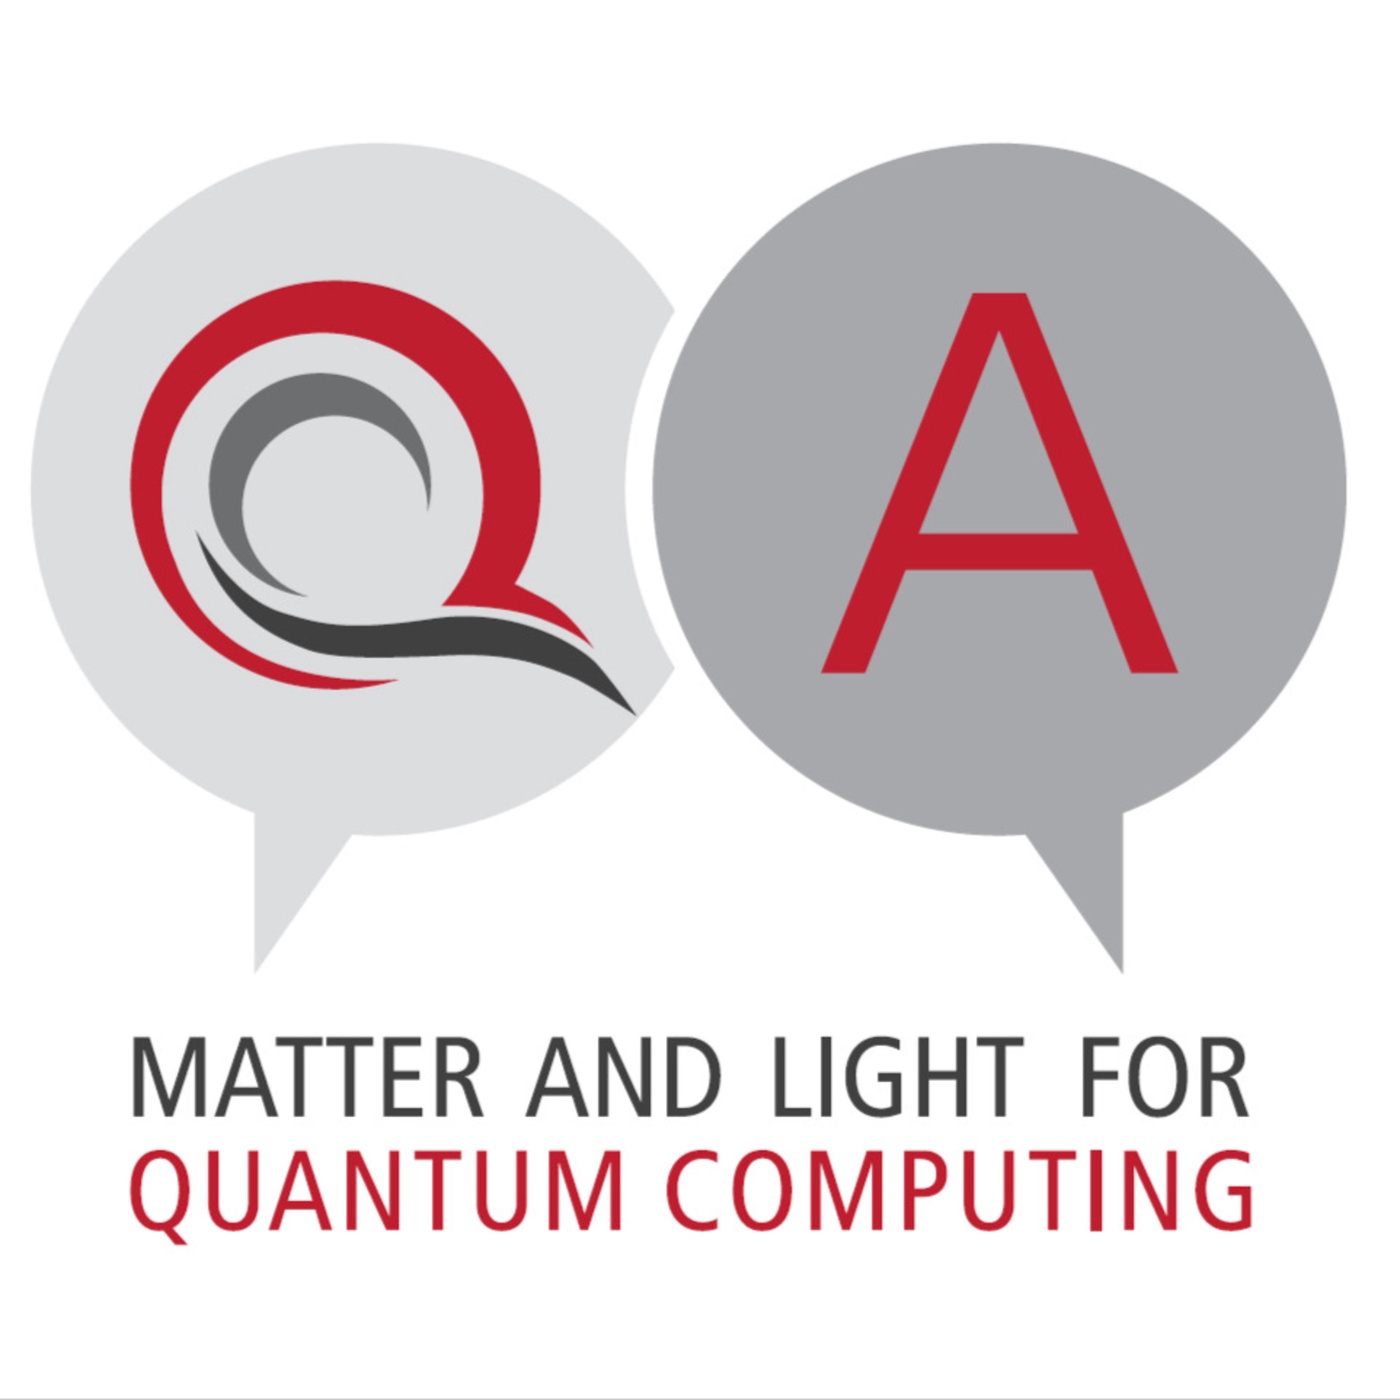 10. Quantum Chemistry: Christian Gogolin and Gian-Luca Anselmetti